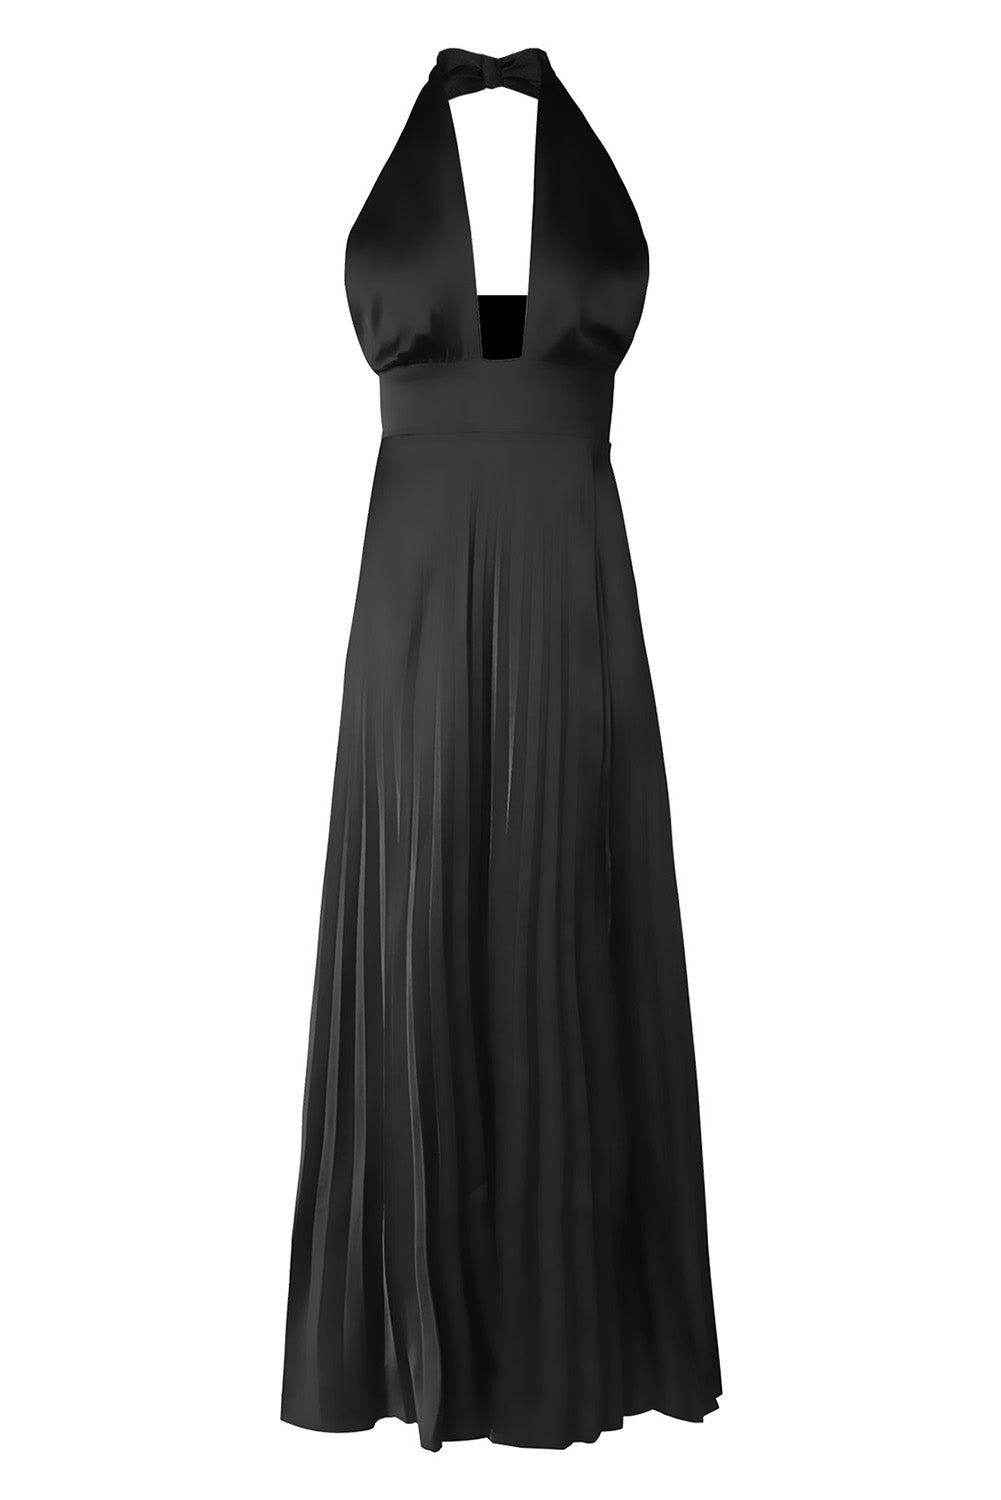 Black Criss Cross Backless Thigh High Split Prom Maxi Dress Maxi Dresses JT's Designer Fashion